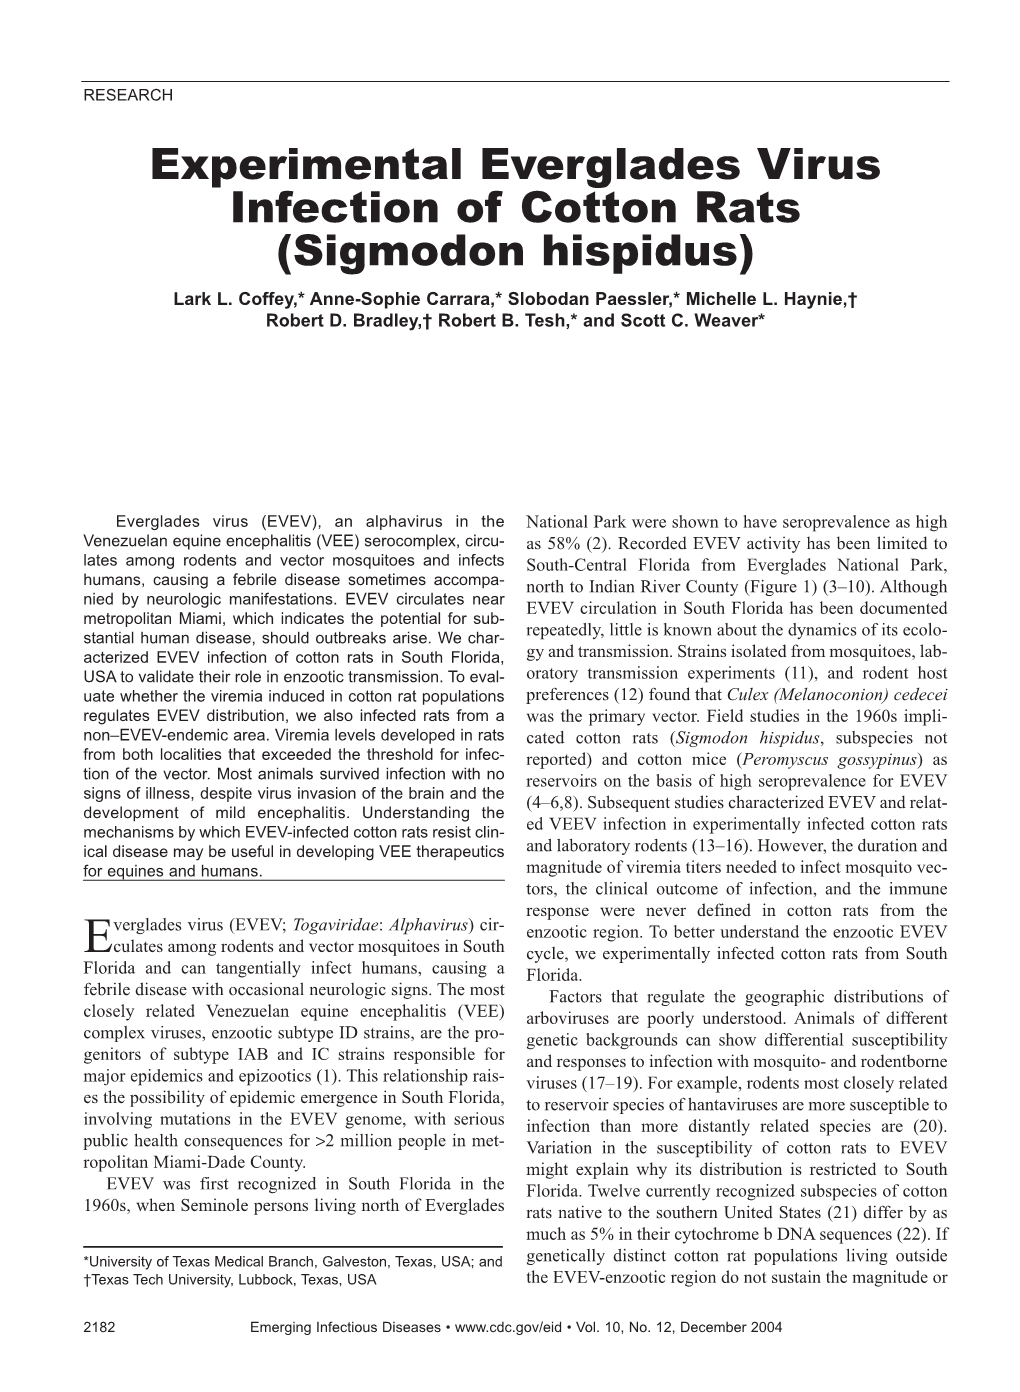 Experimental Everglades Virus Infection of Cotton Rats (Sigmodon Hispidus) Lark L